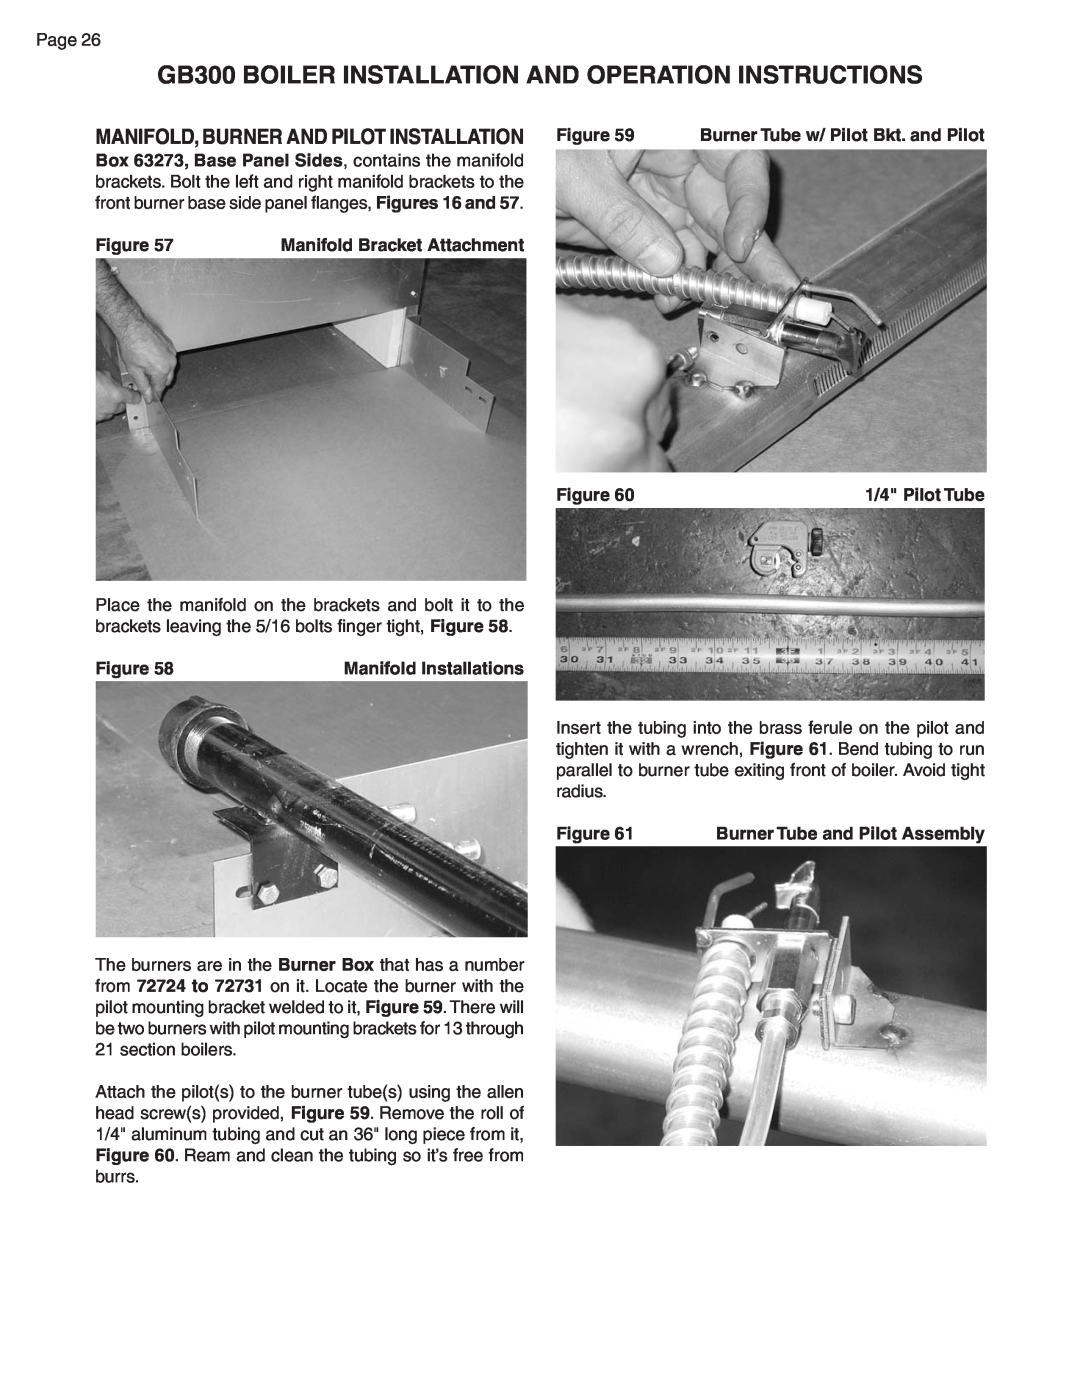 Smith Cast Iron Boilers GB300 warranty Figure, Manifold Bracket Attachment, Manifold Installations 